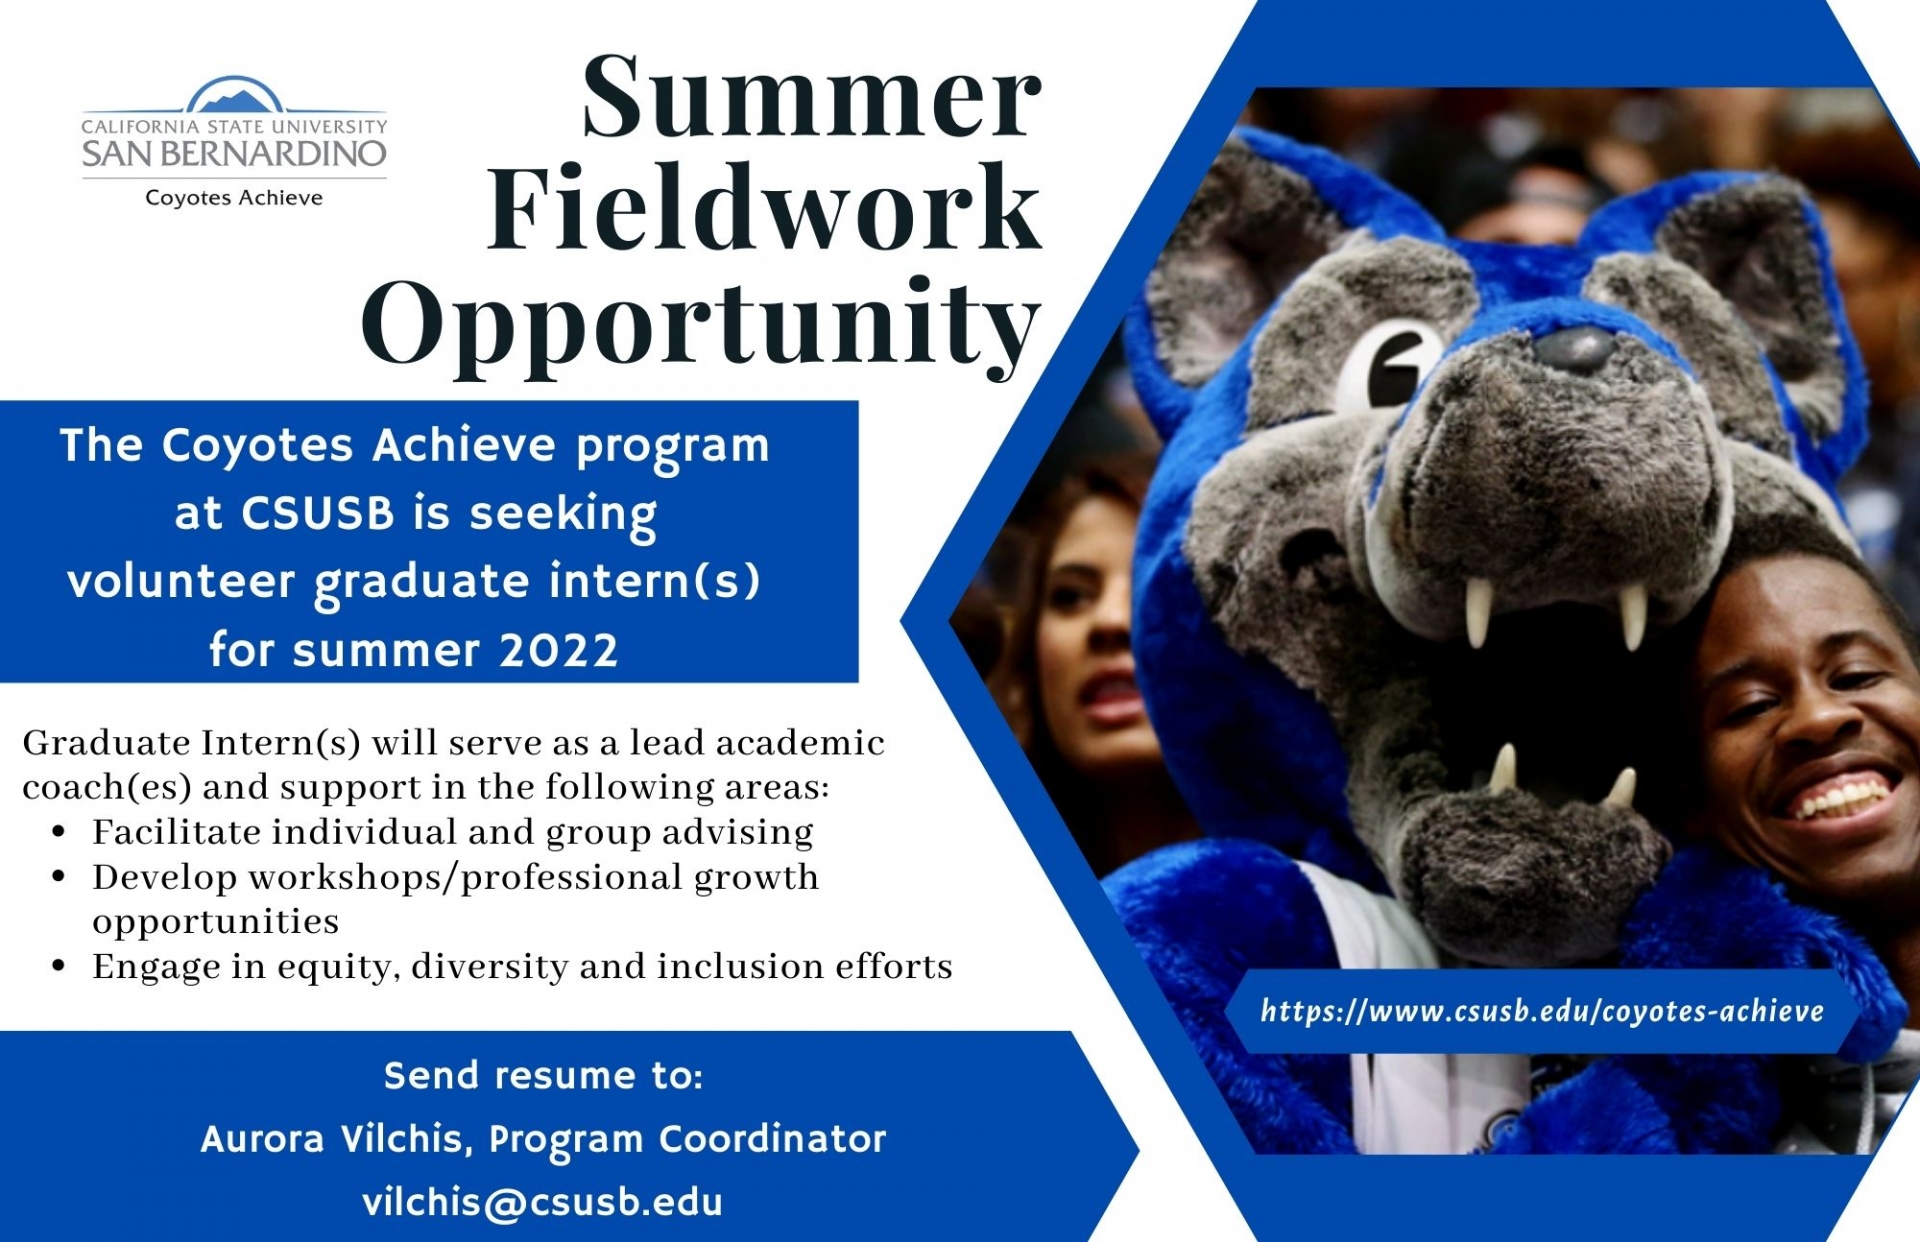 CSUSB Summer Fieldwork Opportunity 